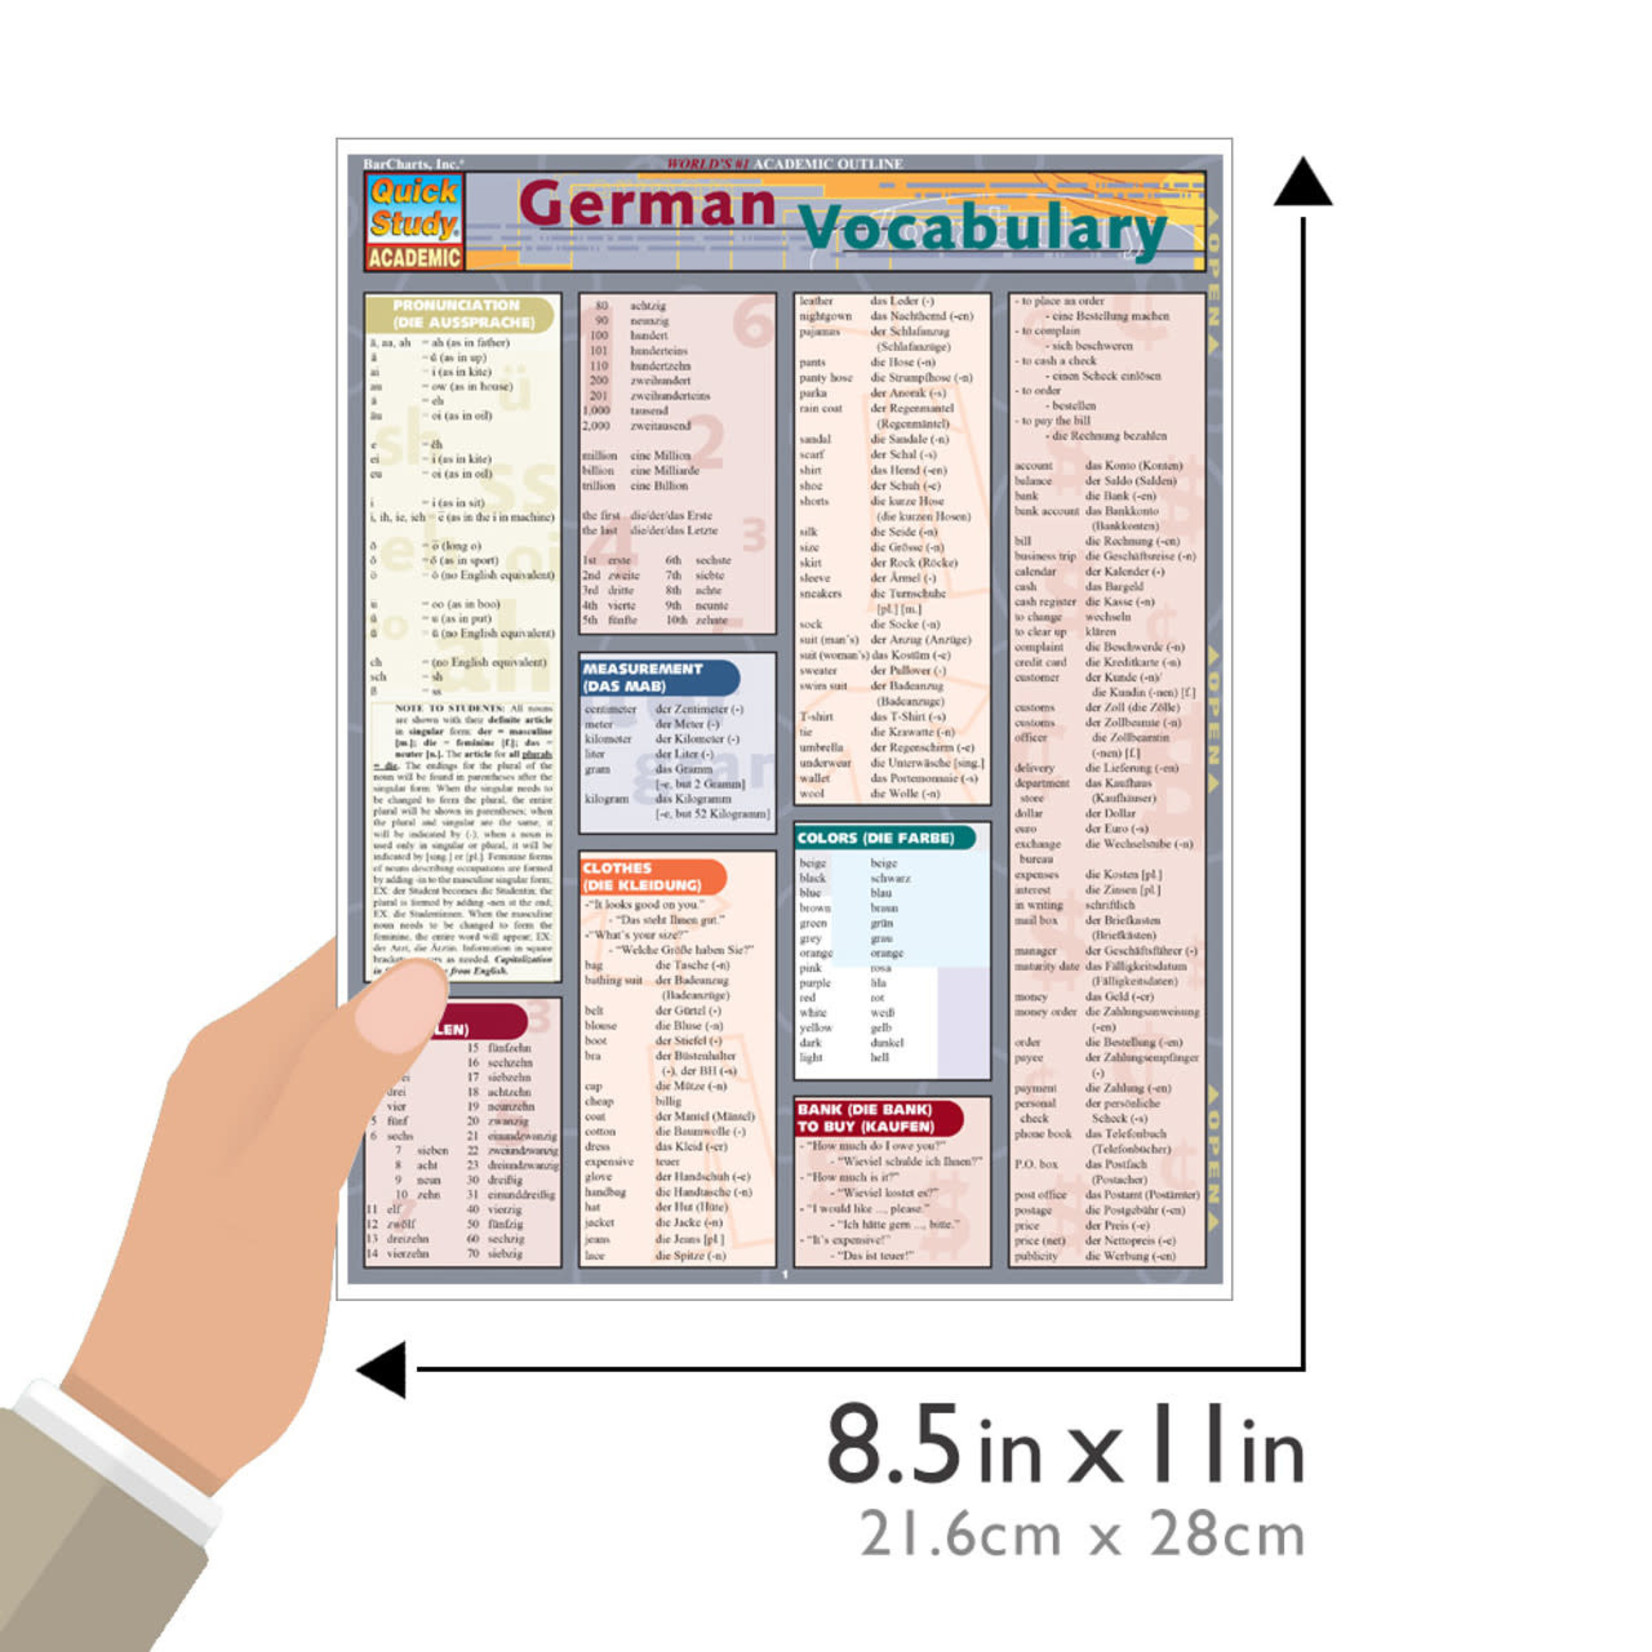 BAR CHARTS QuickStudy | German Vocabulary Laminated Study Guide